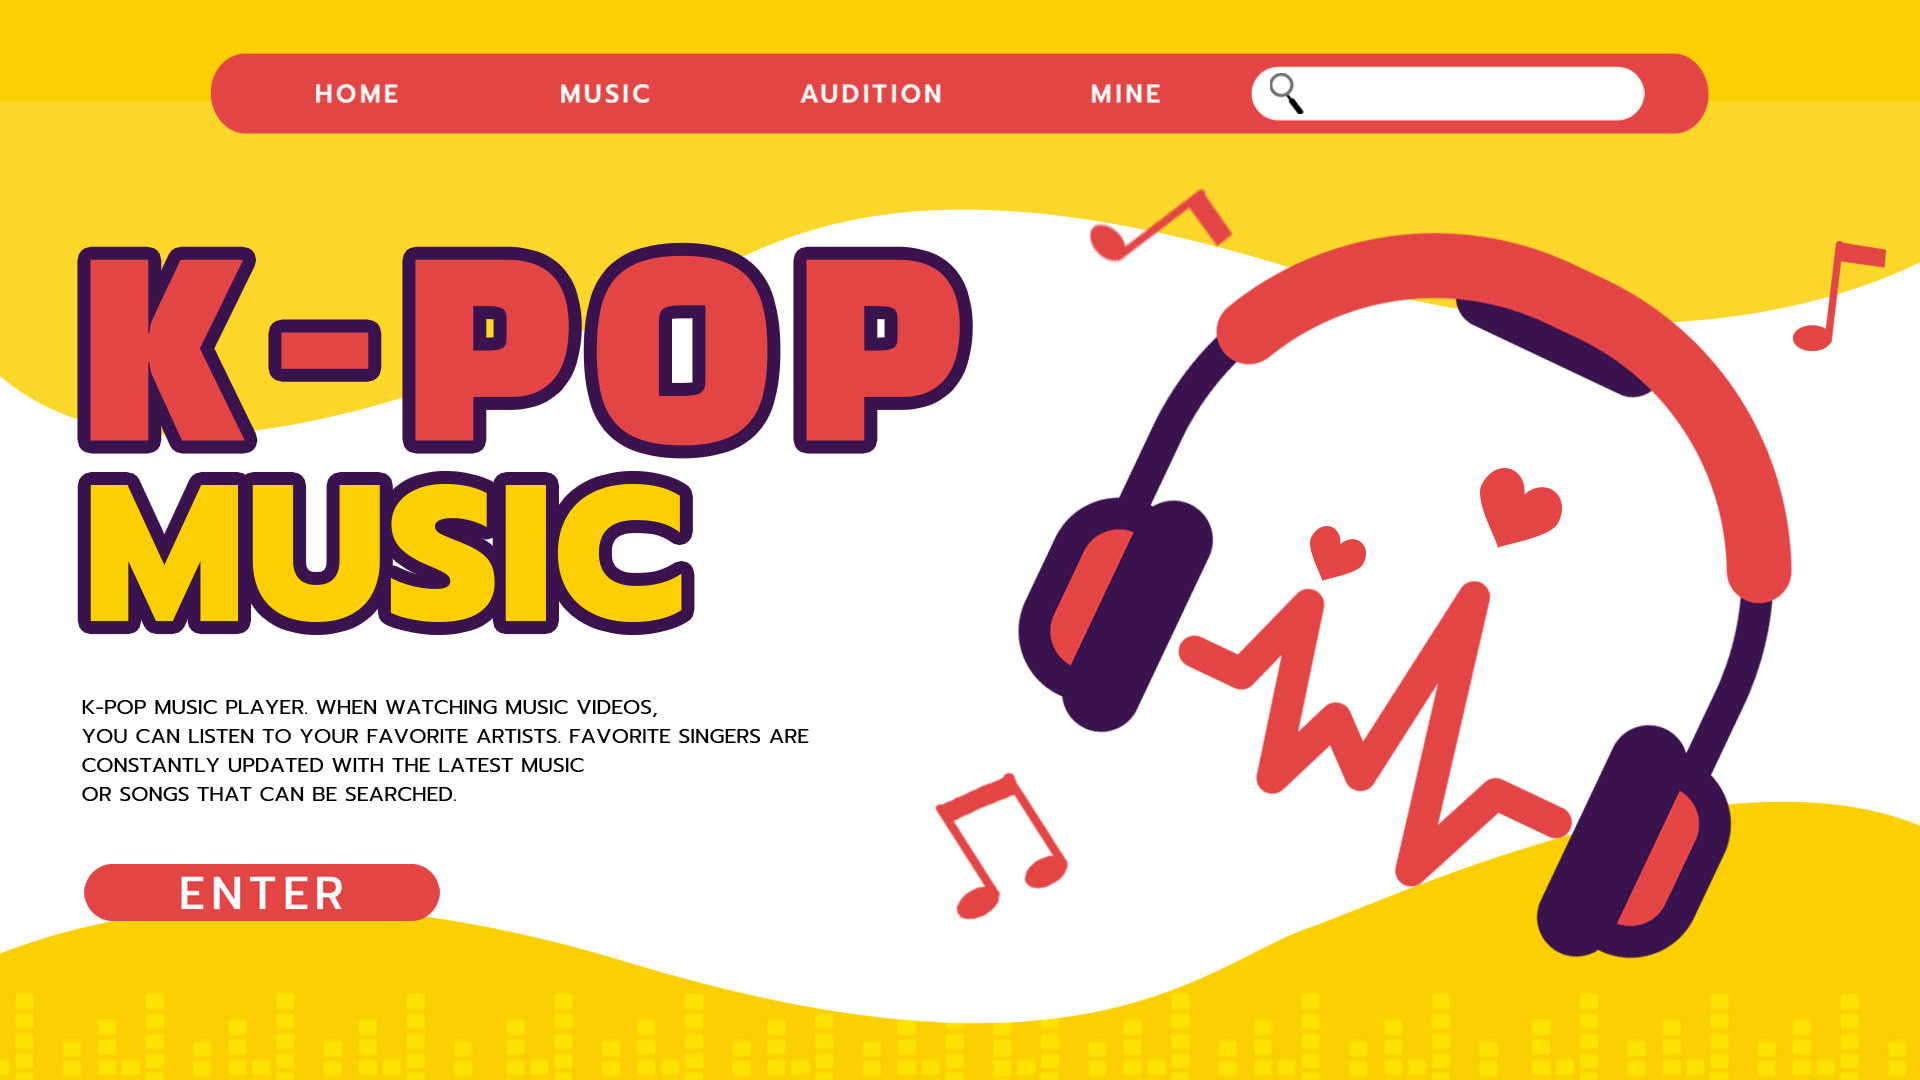 k-pop音乐概念模板彩色音乐风格横幅图片